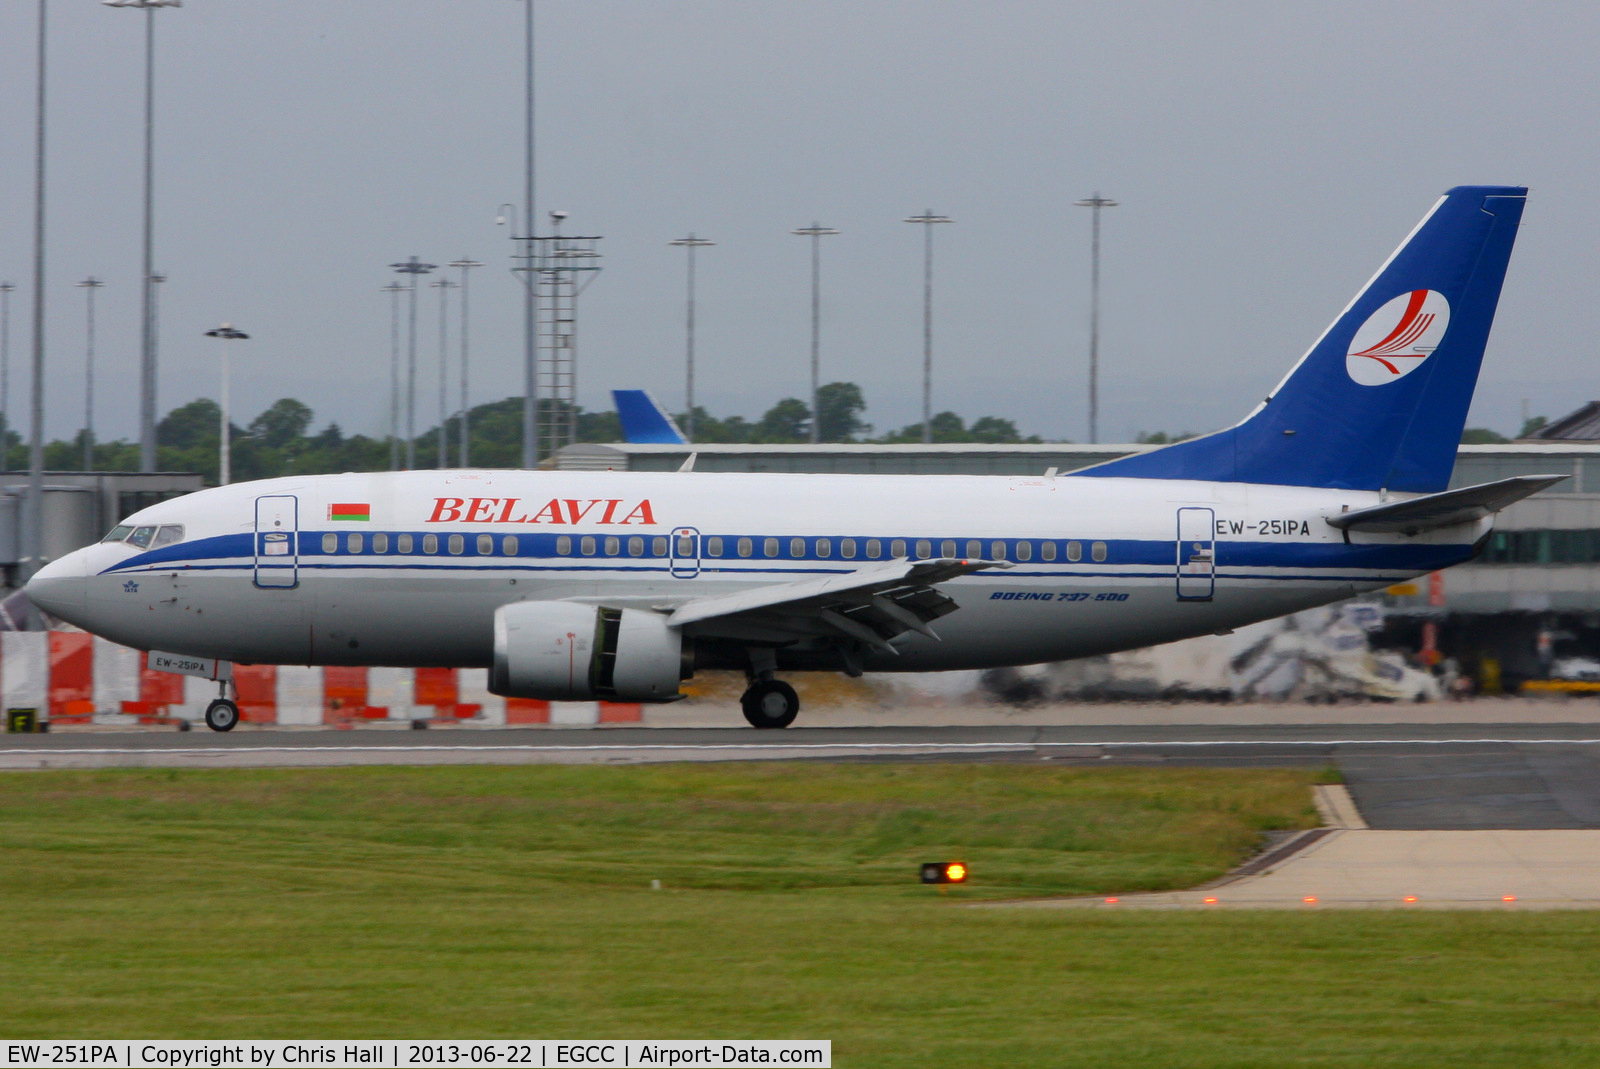 EW-251PA, 1997 Boeing 737-5Q8 C/N 27634/2889, Belavia